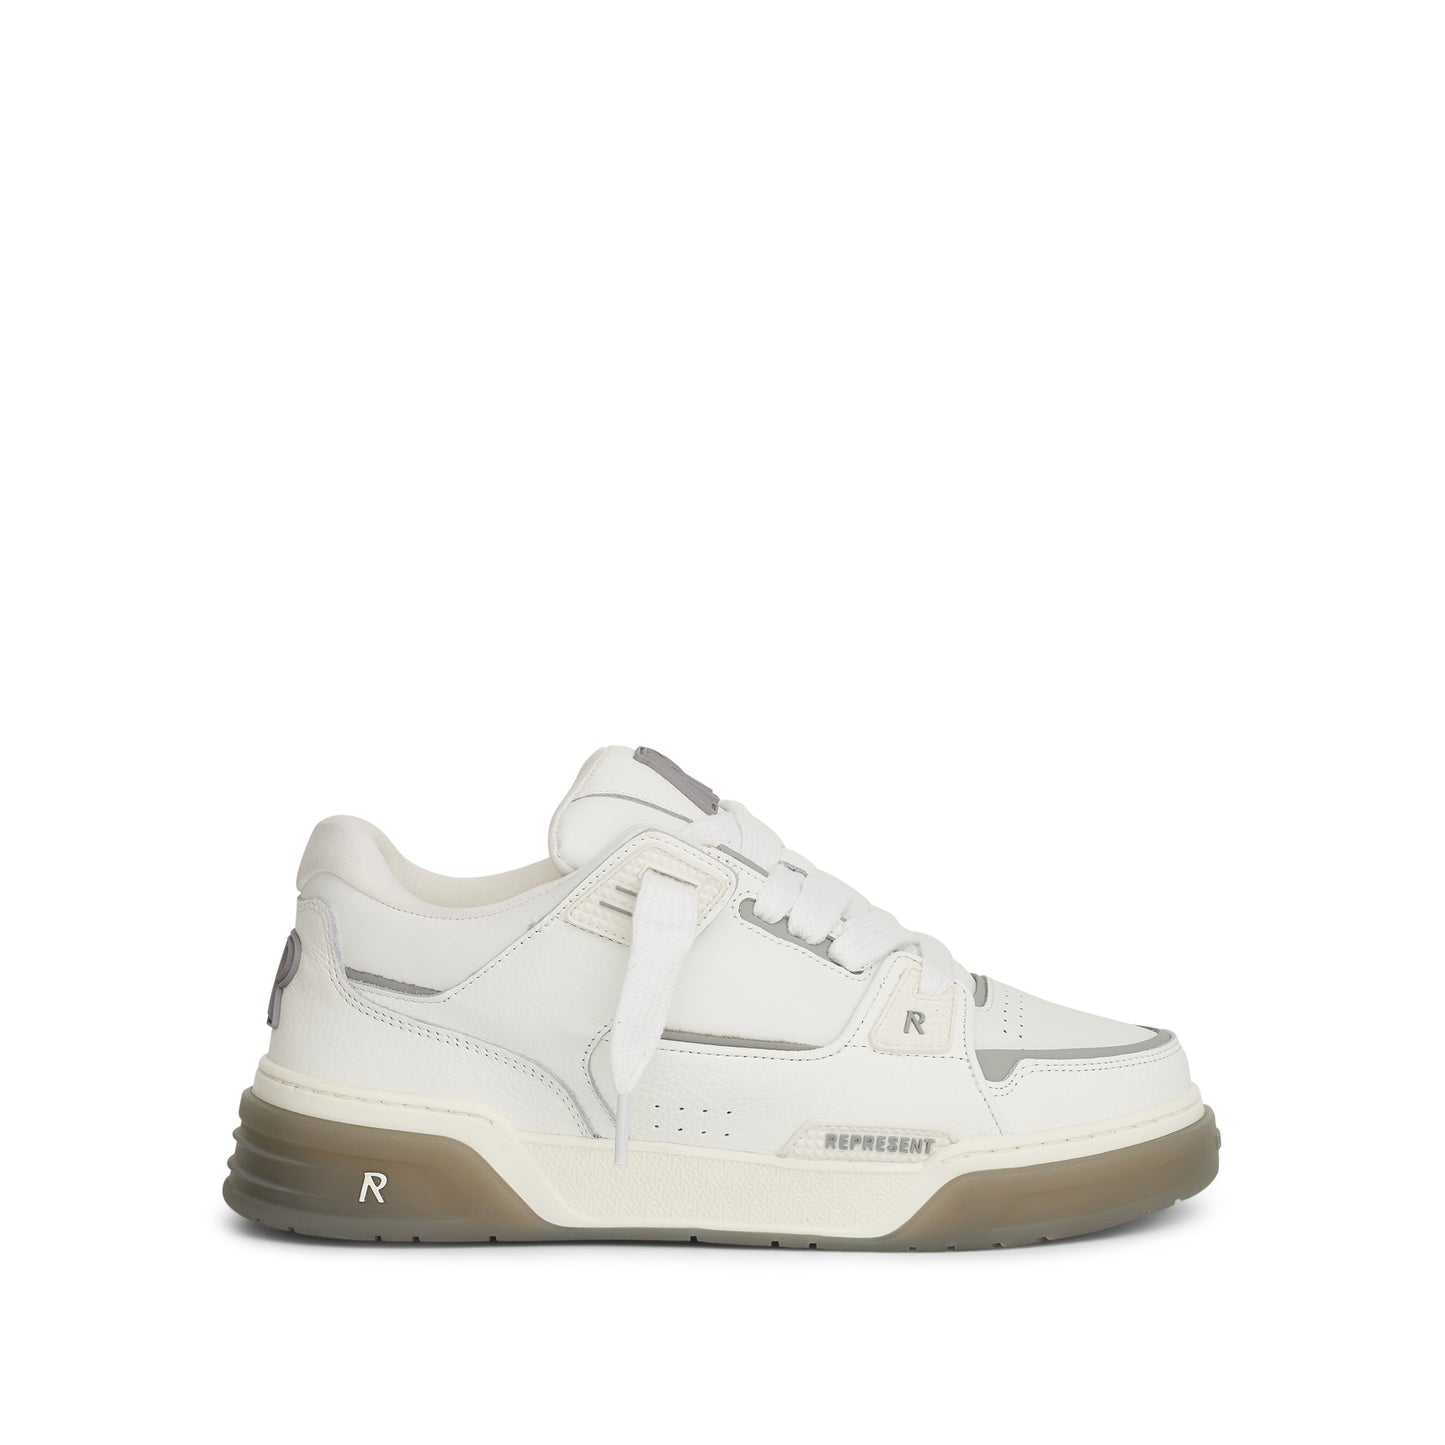 Studio Low Top Sneaker in White/Grey